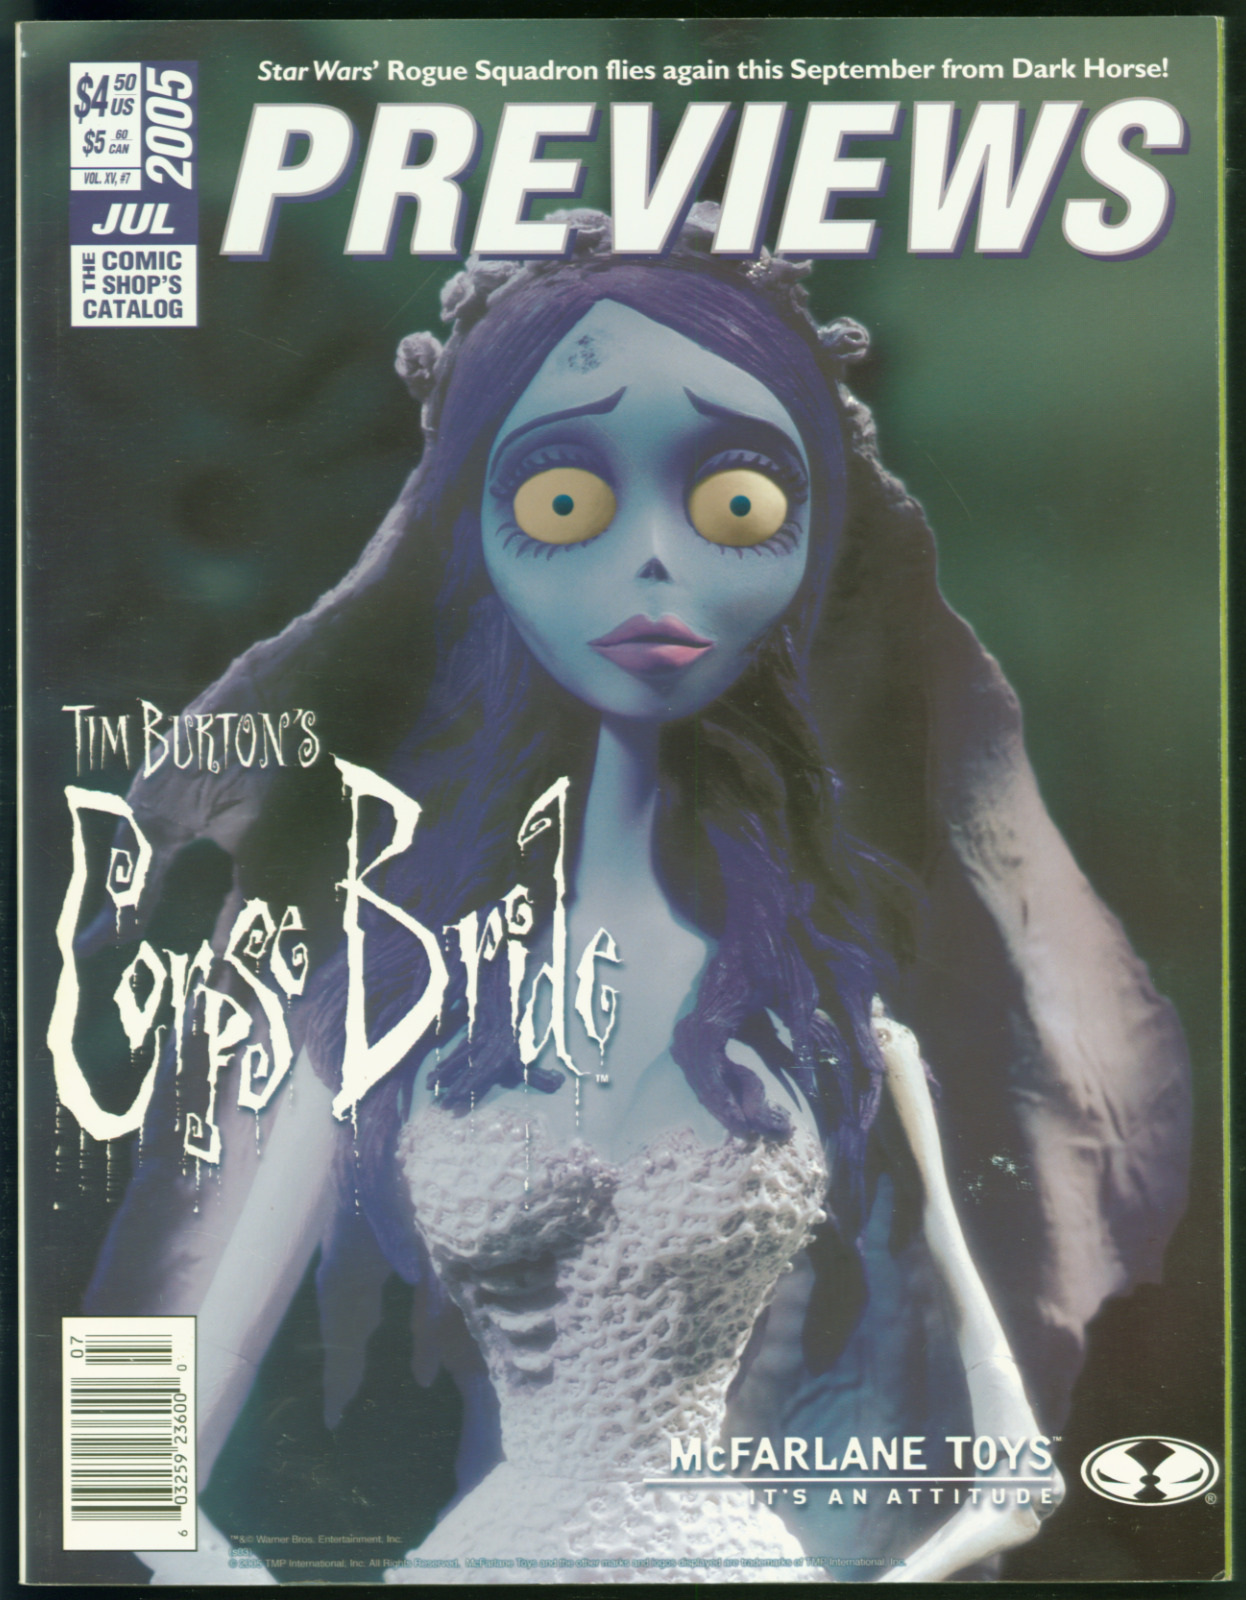 VTG July 2005 Diamond Comics Previews Catalog  Tim Burton's Corpse Bride Cover